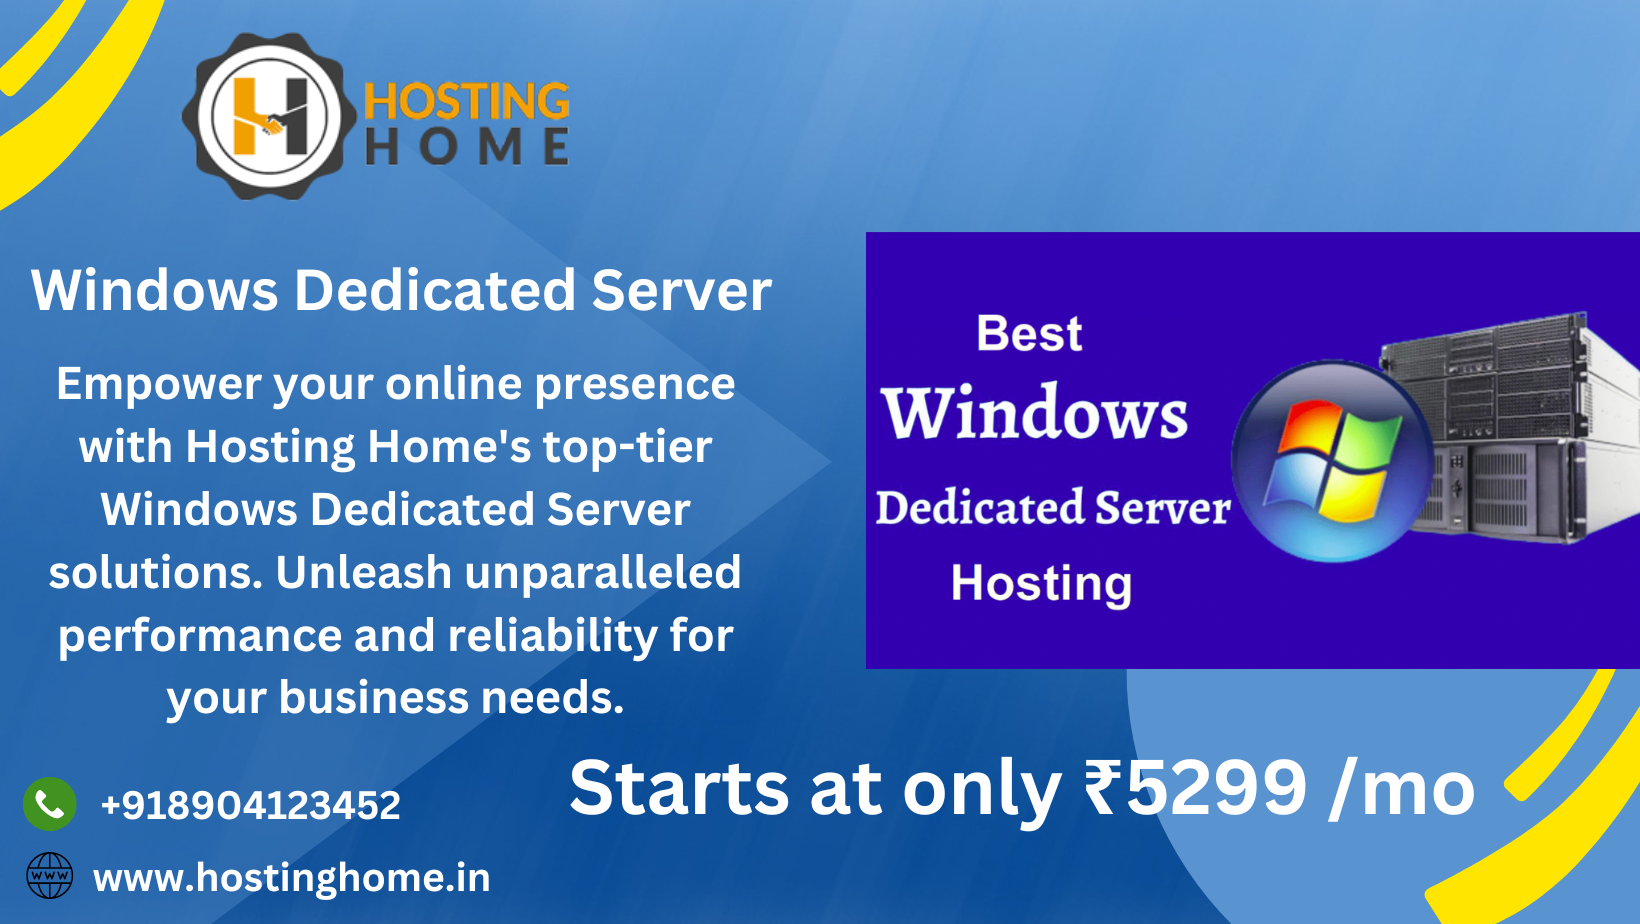 Experience Hosting Home Windows Dedicated Server 17134354200